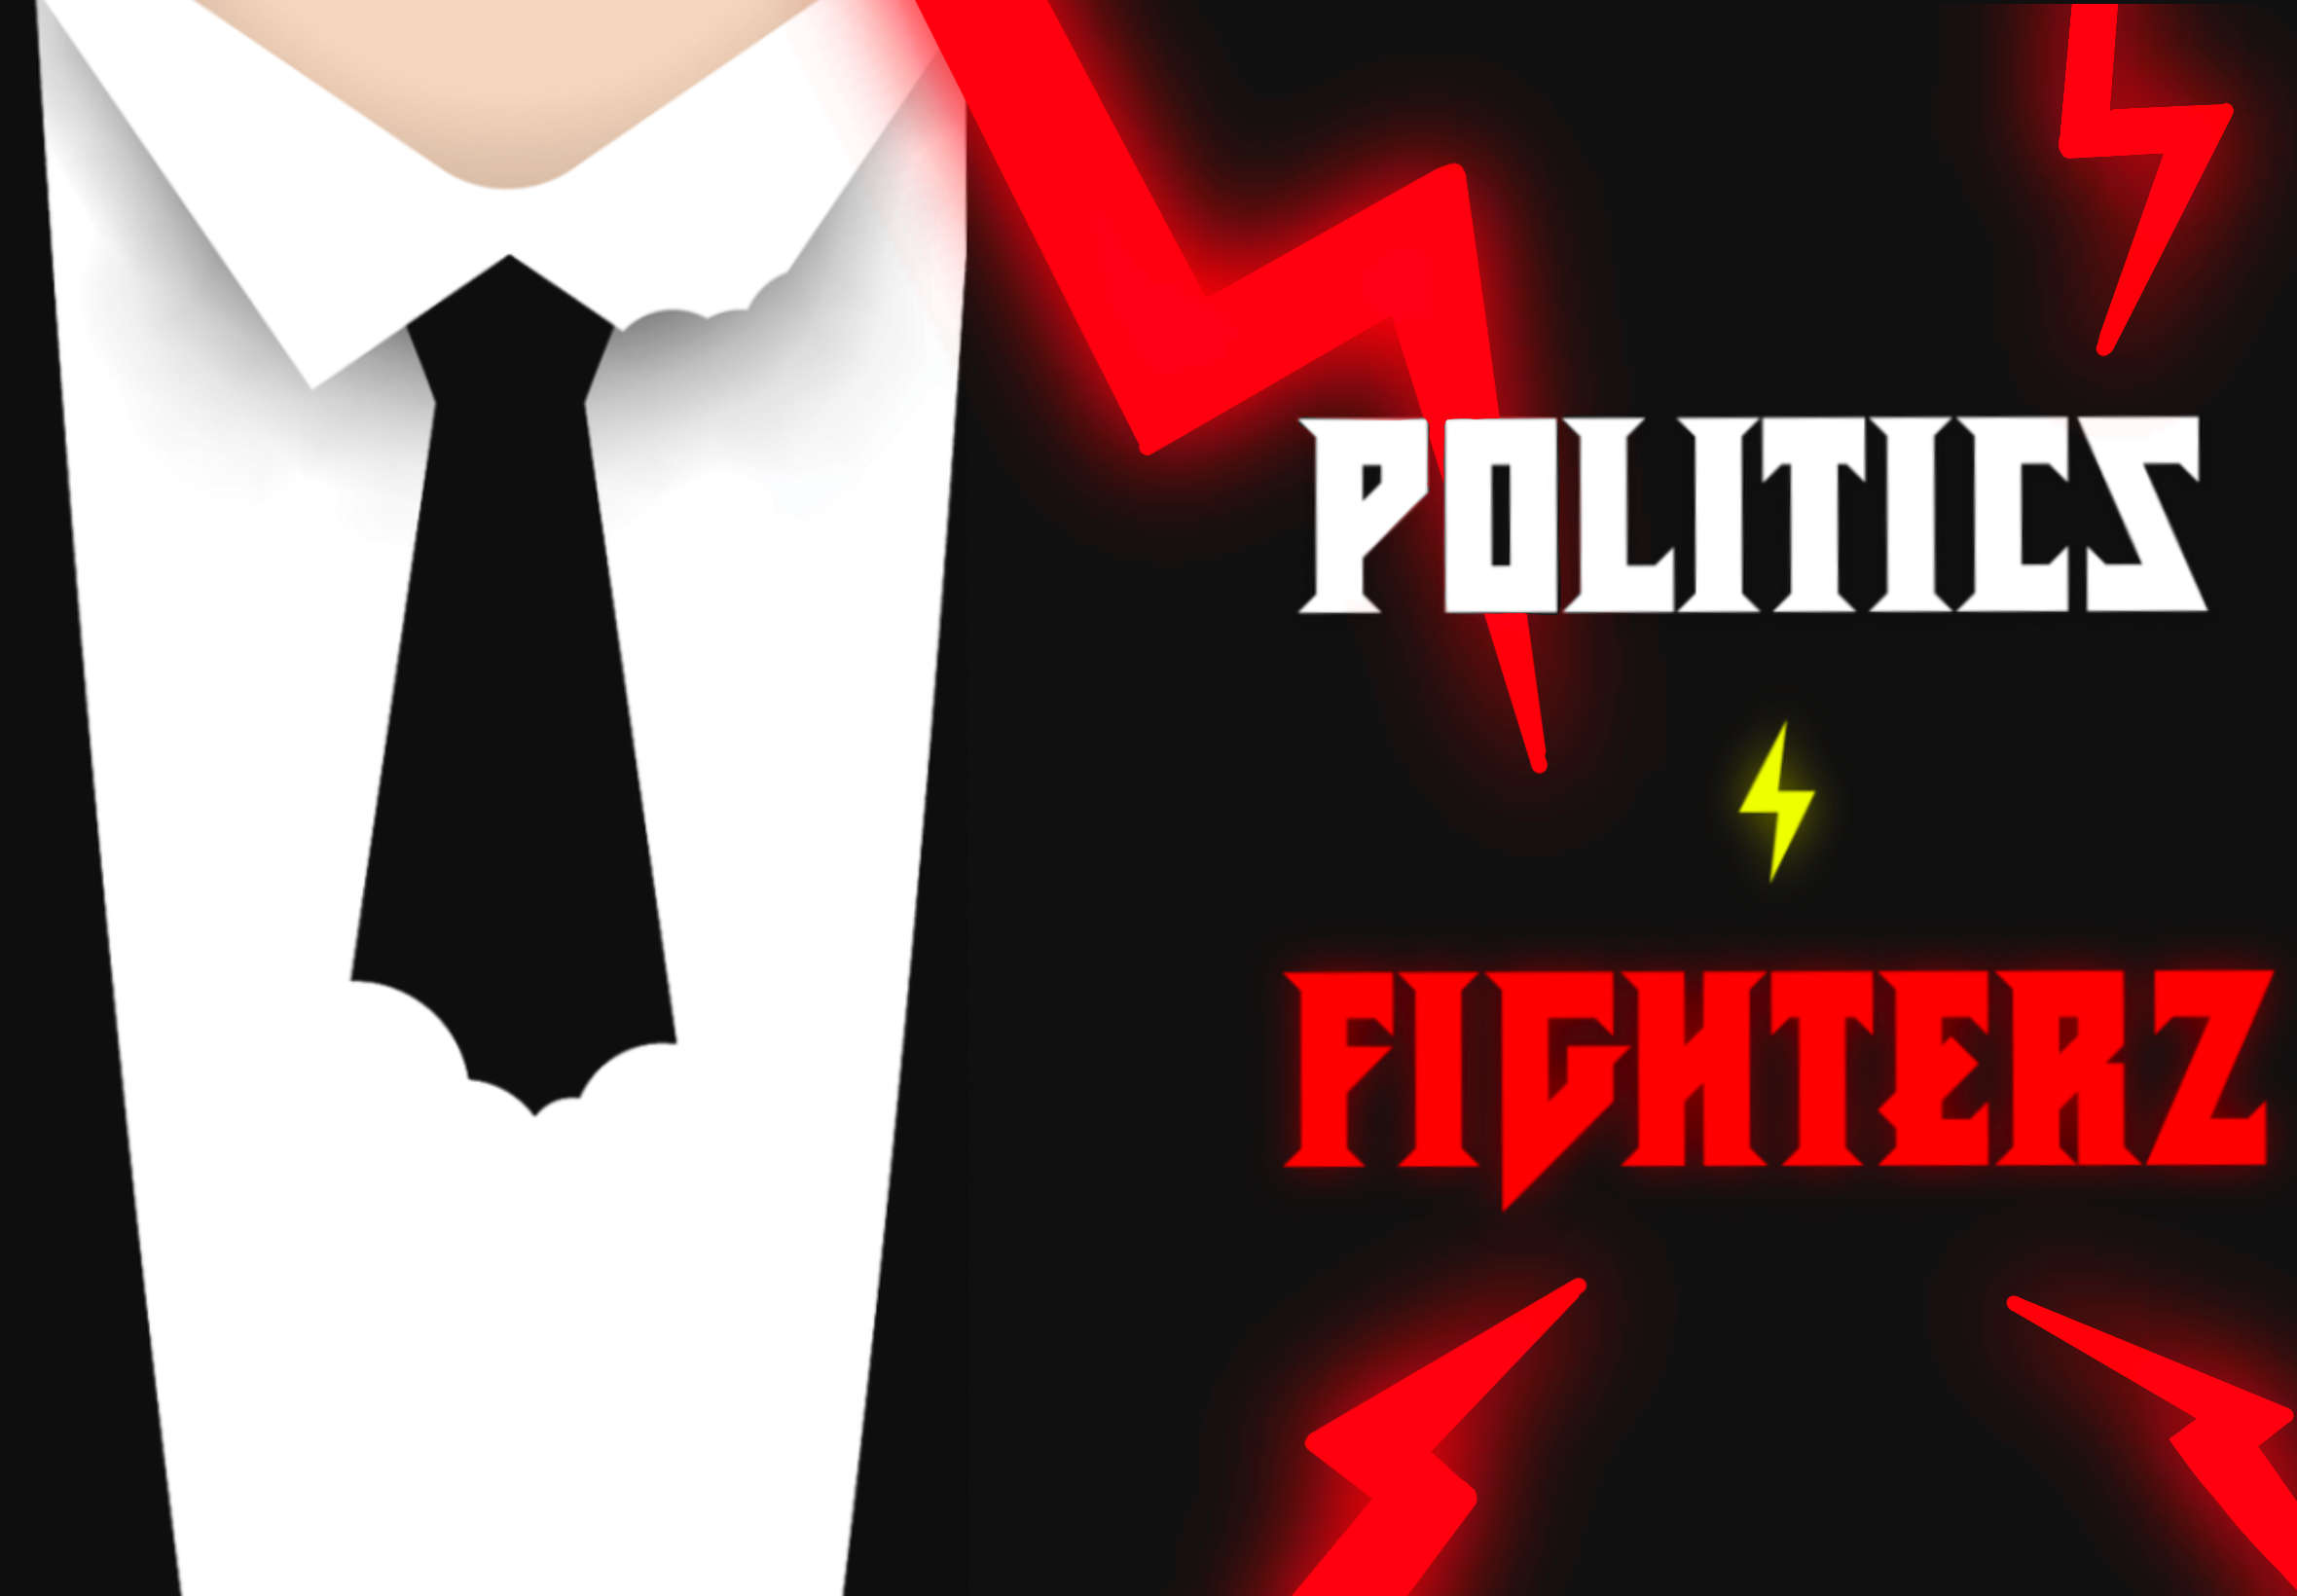 Politicz FighterZ